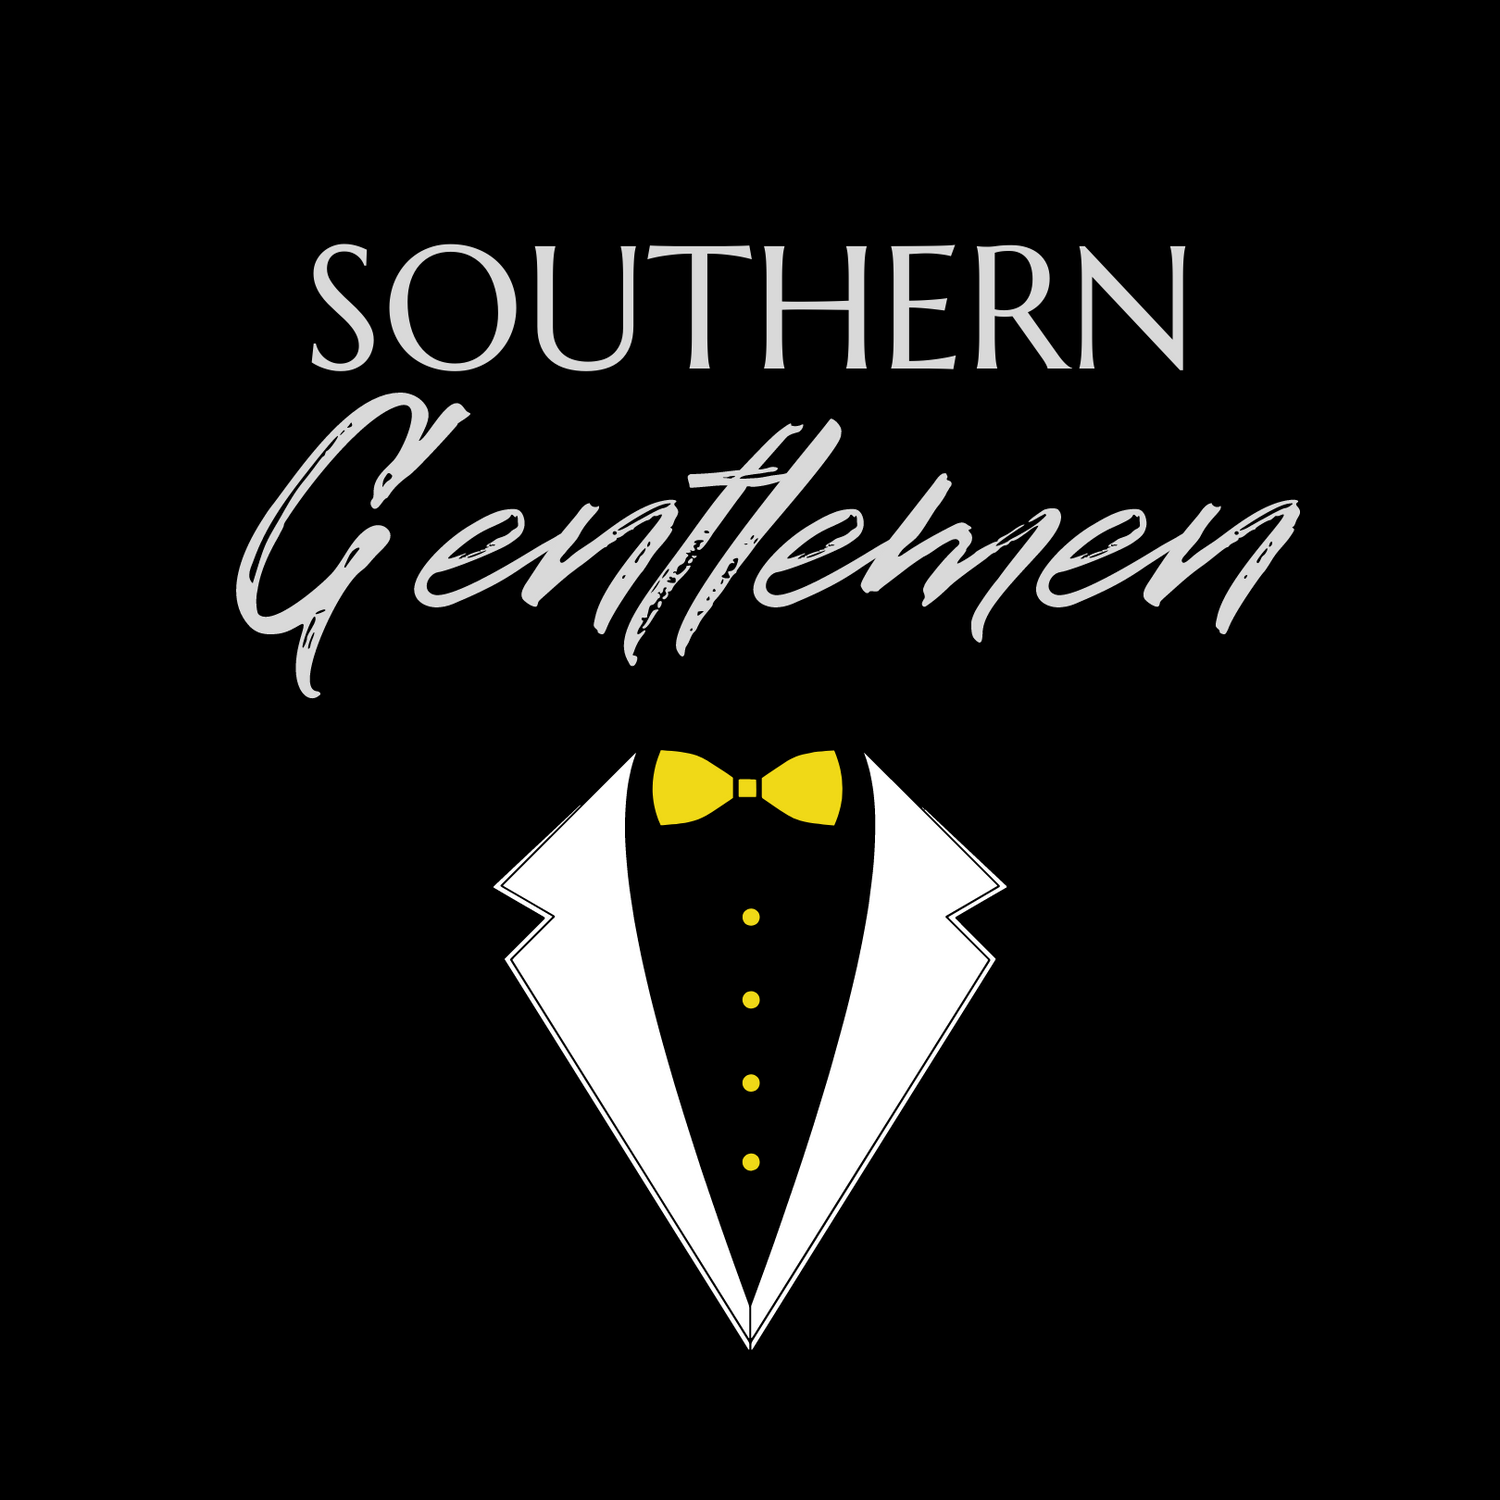 Southern Gentlemen at ASBF 22